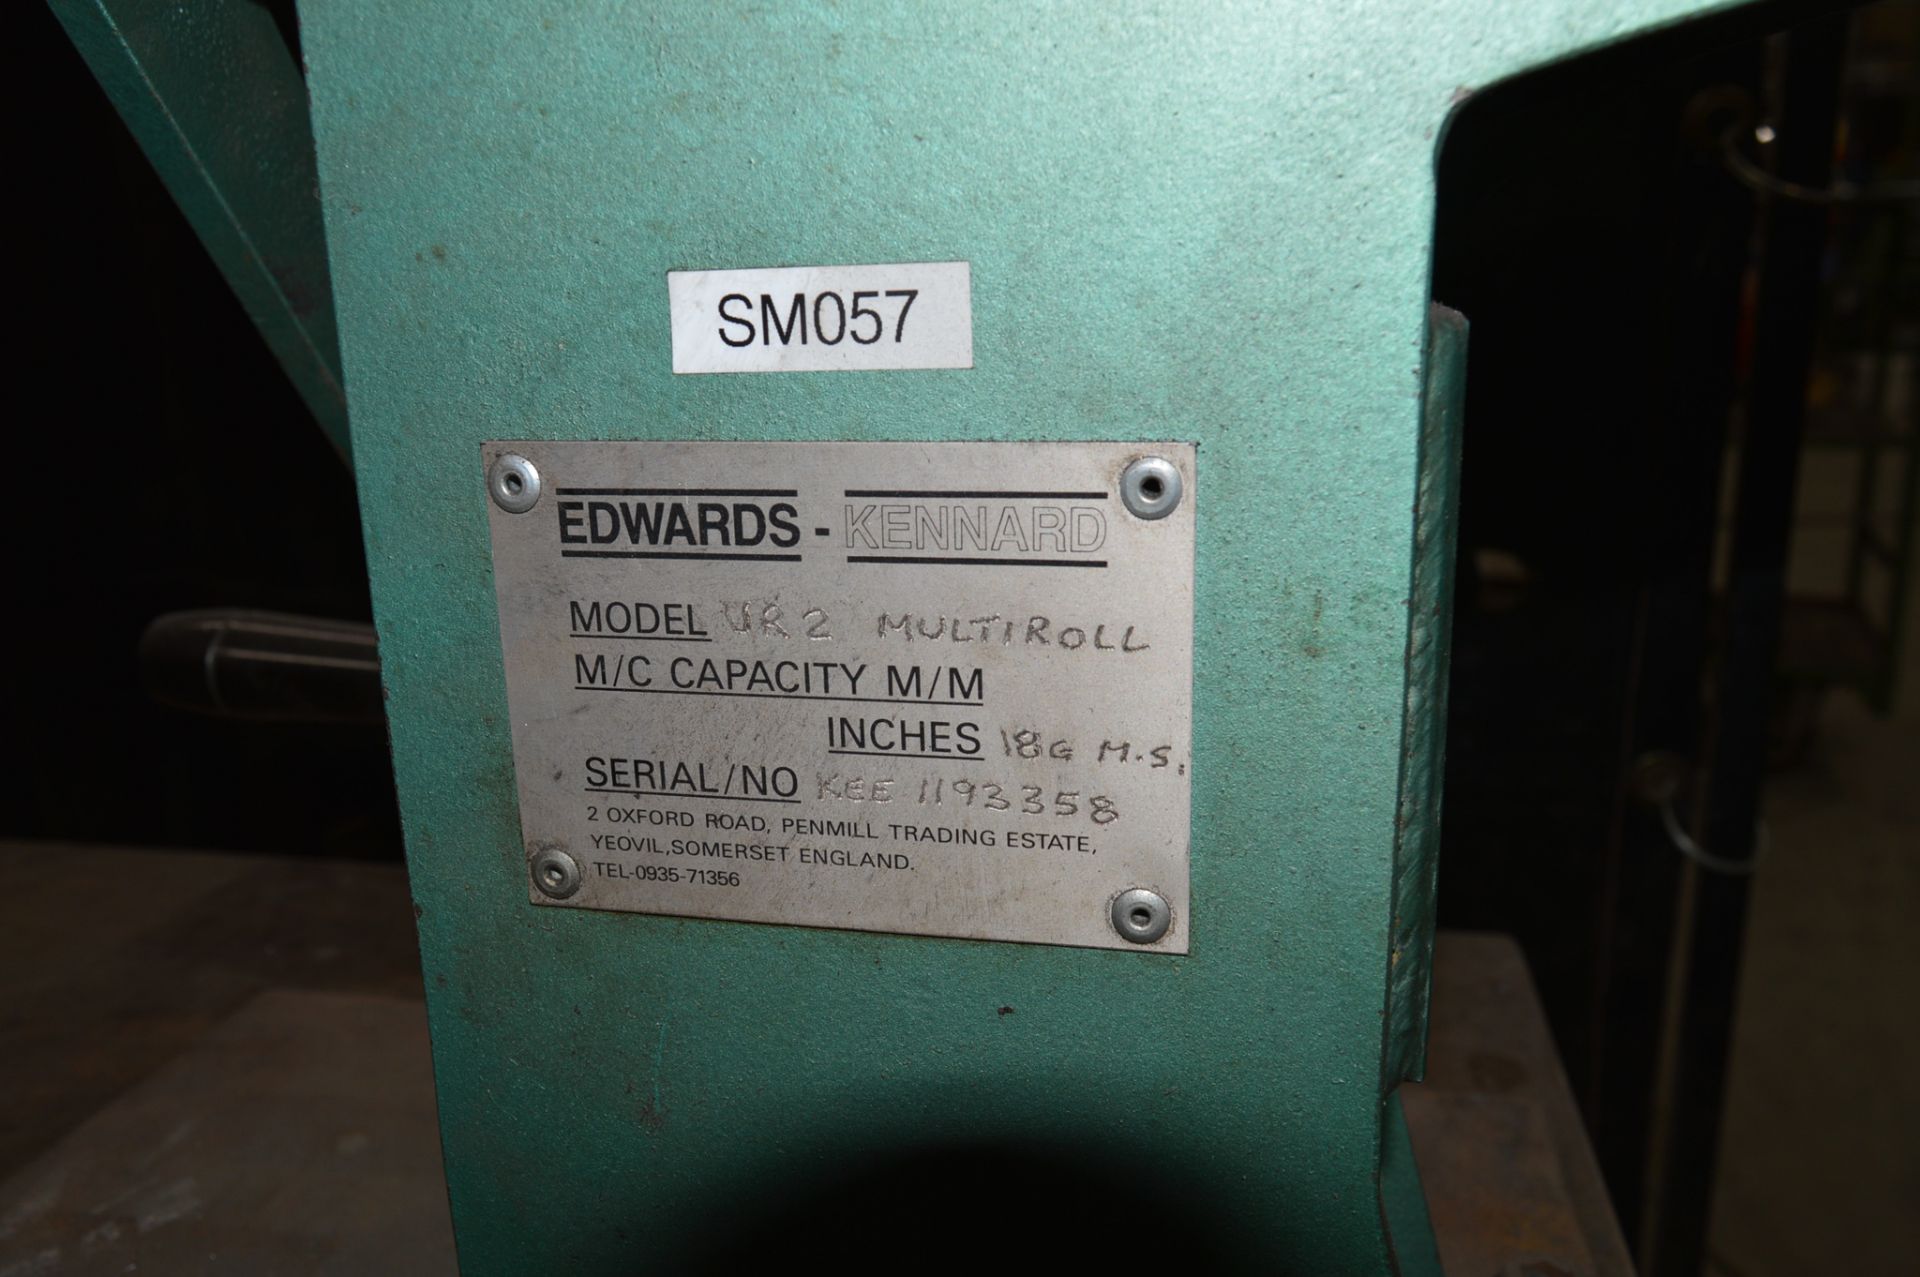 Edwards Kennard UR2 multi roll manual swaging machine Capacity 18g m.s S/N: KEE 1193358 c/w quantity - Image 5 of 5